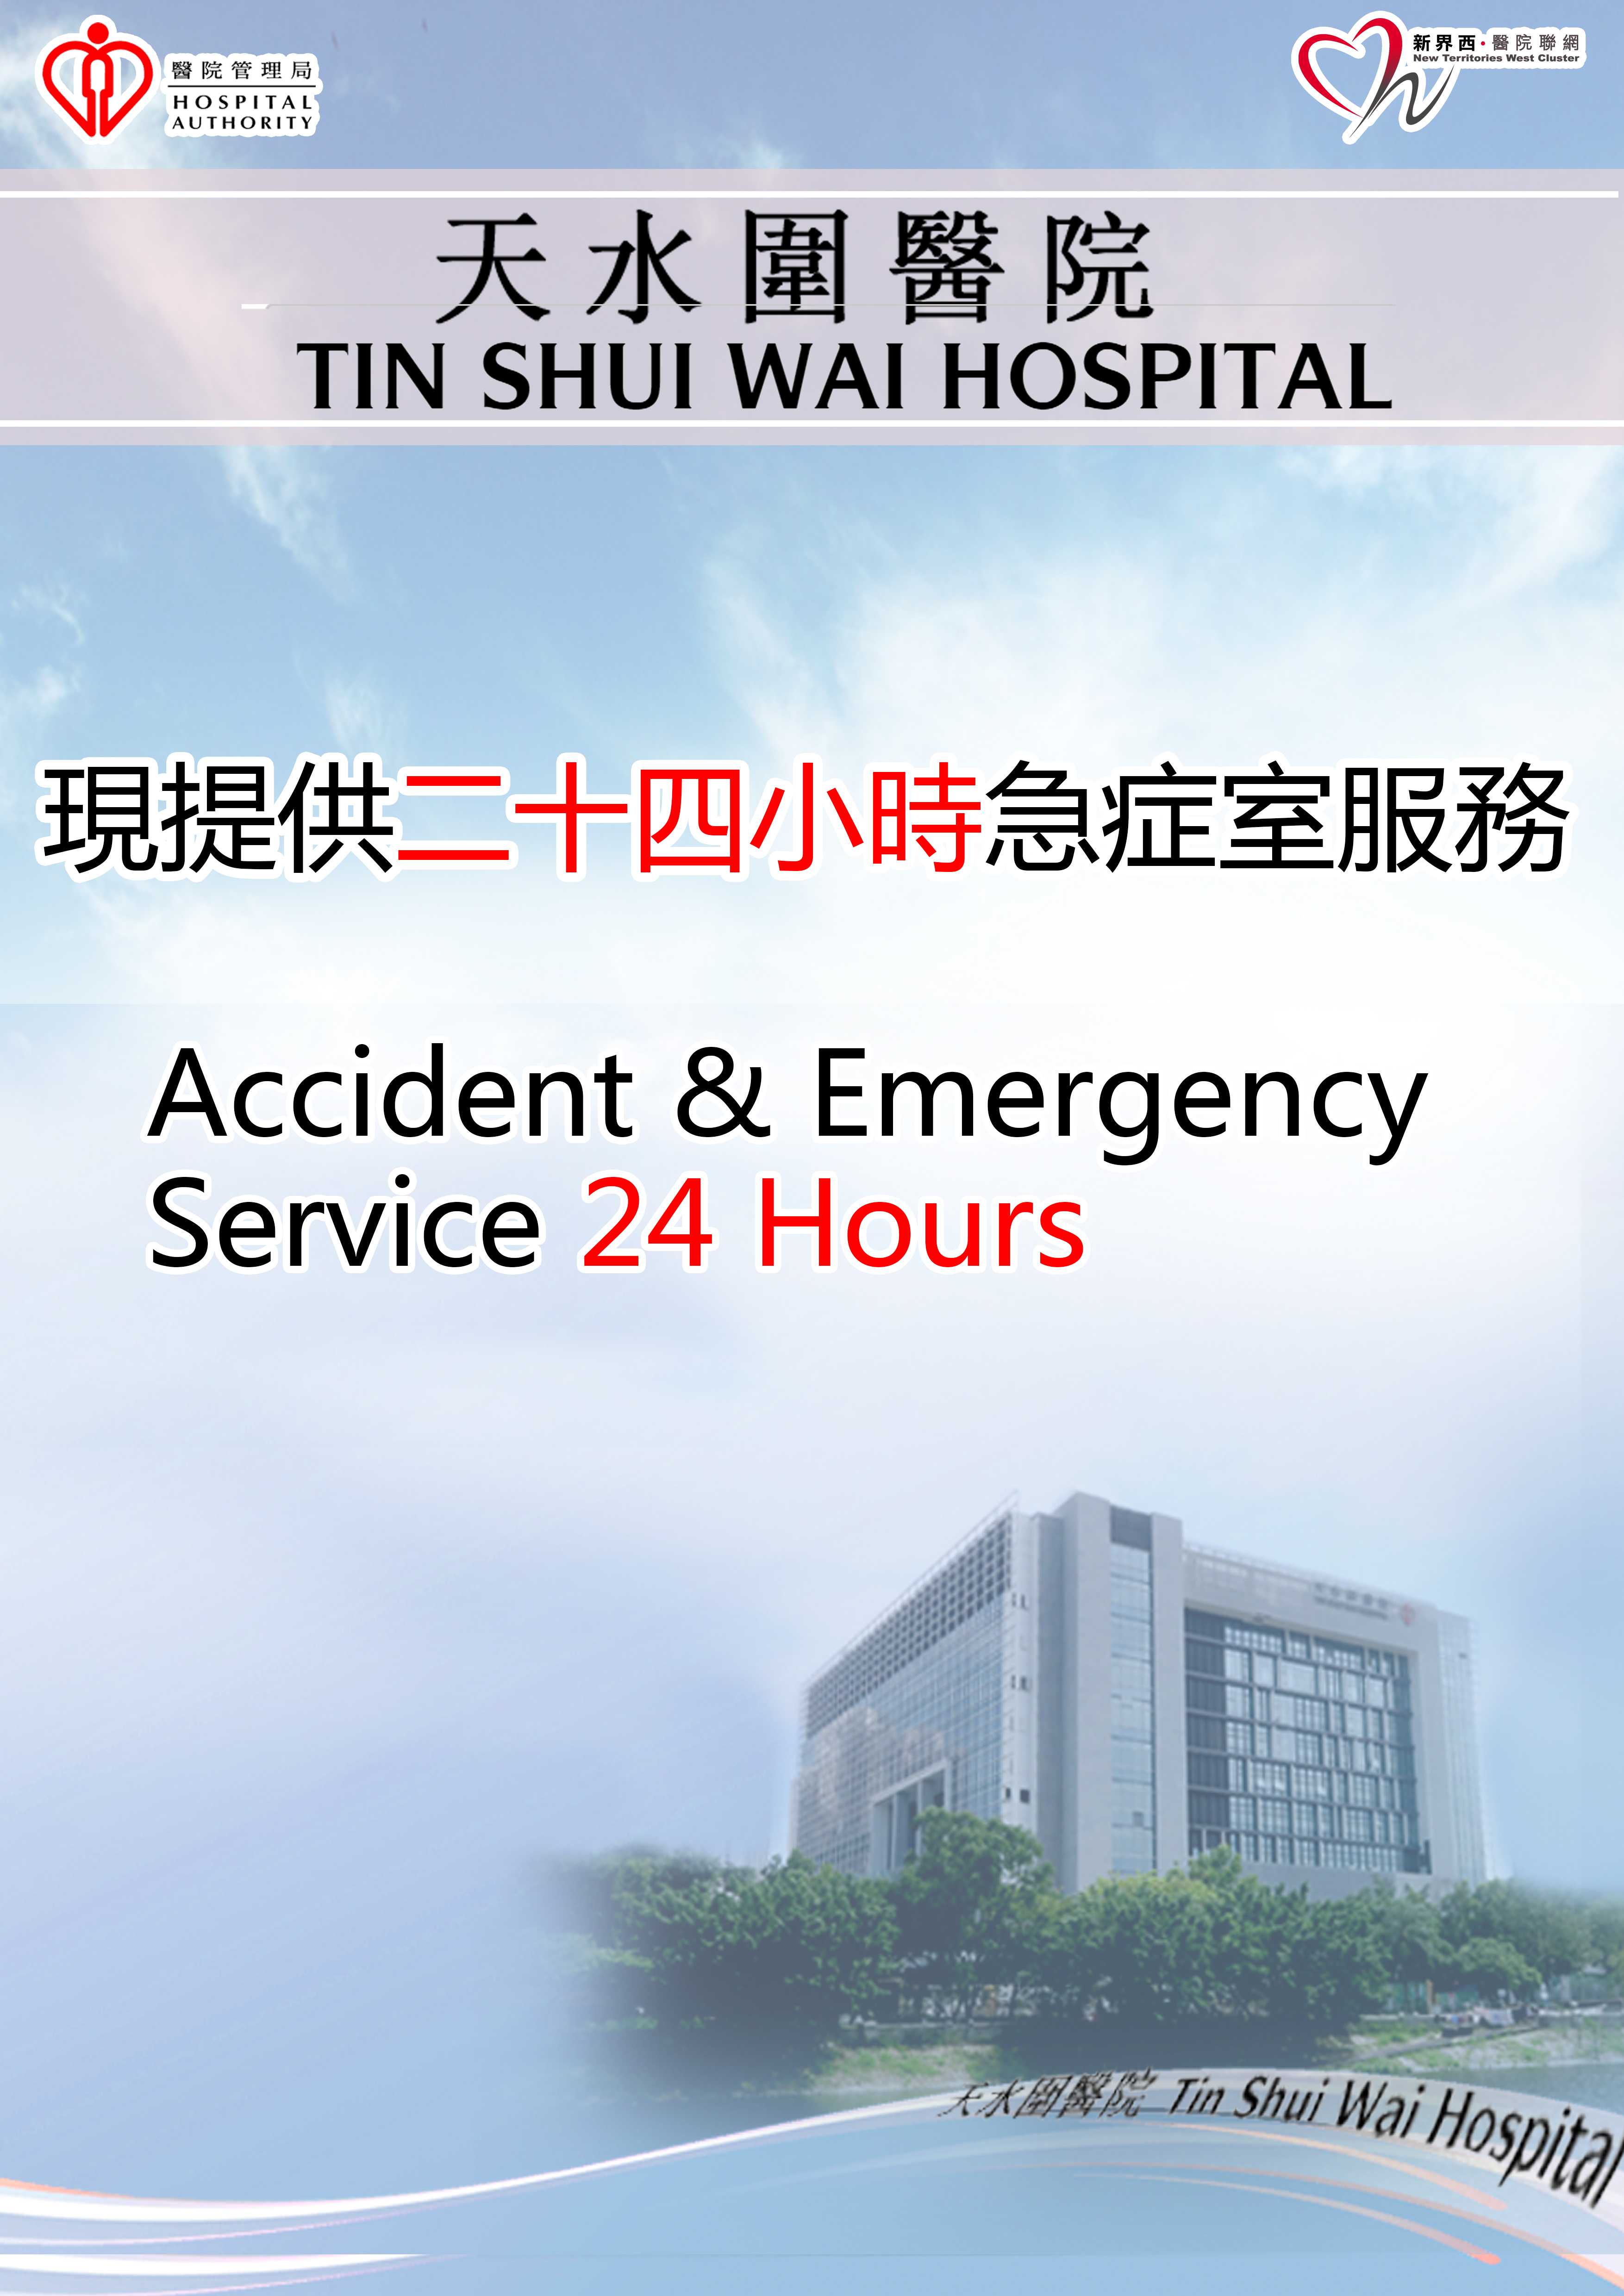 Tin Shui Wai Hospital Accident & Emergency Service 24 Hours